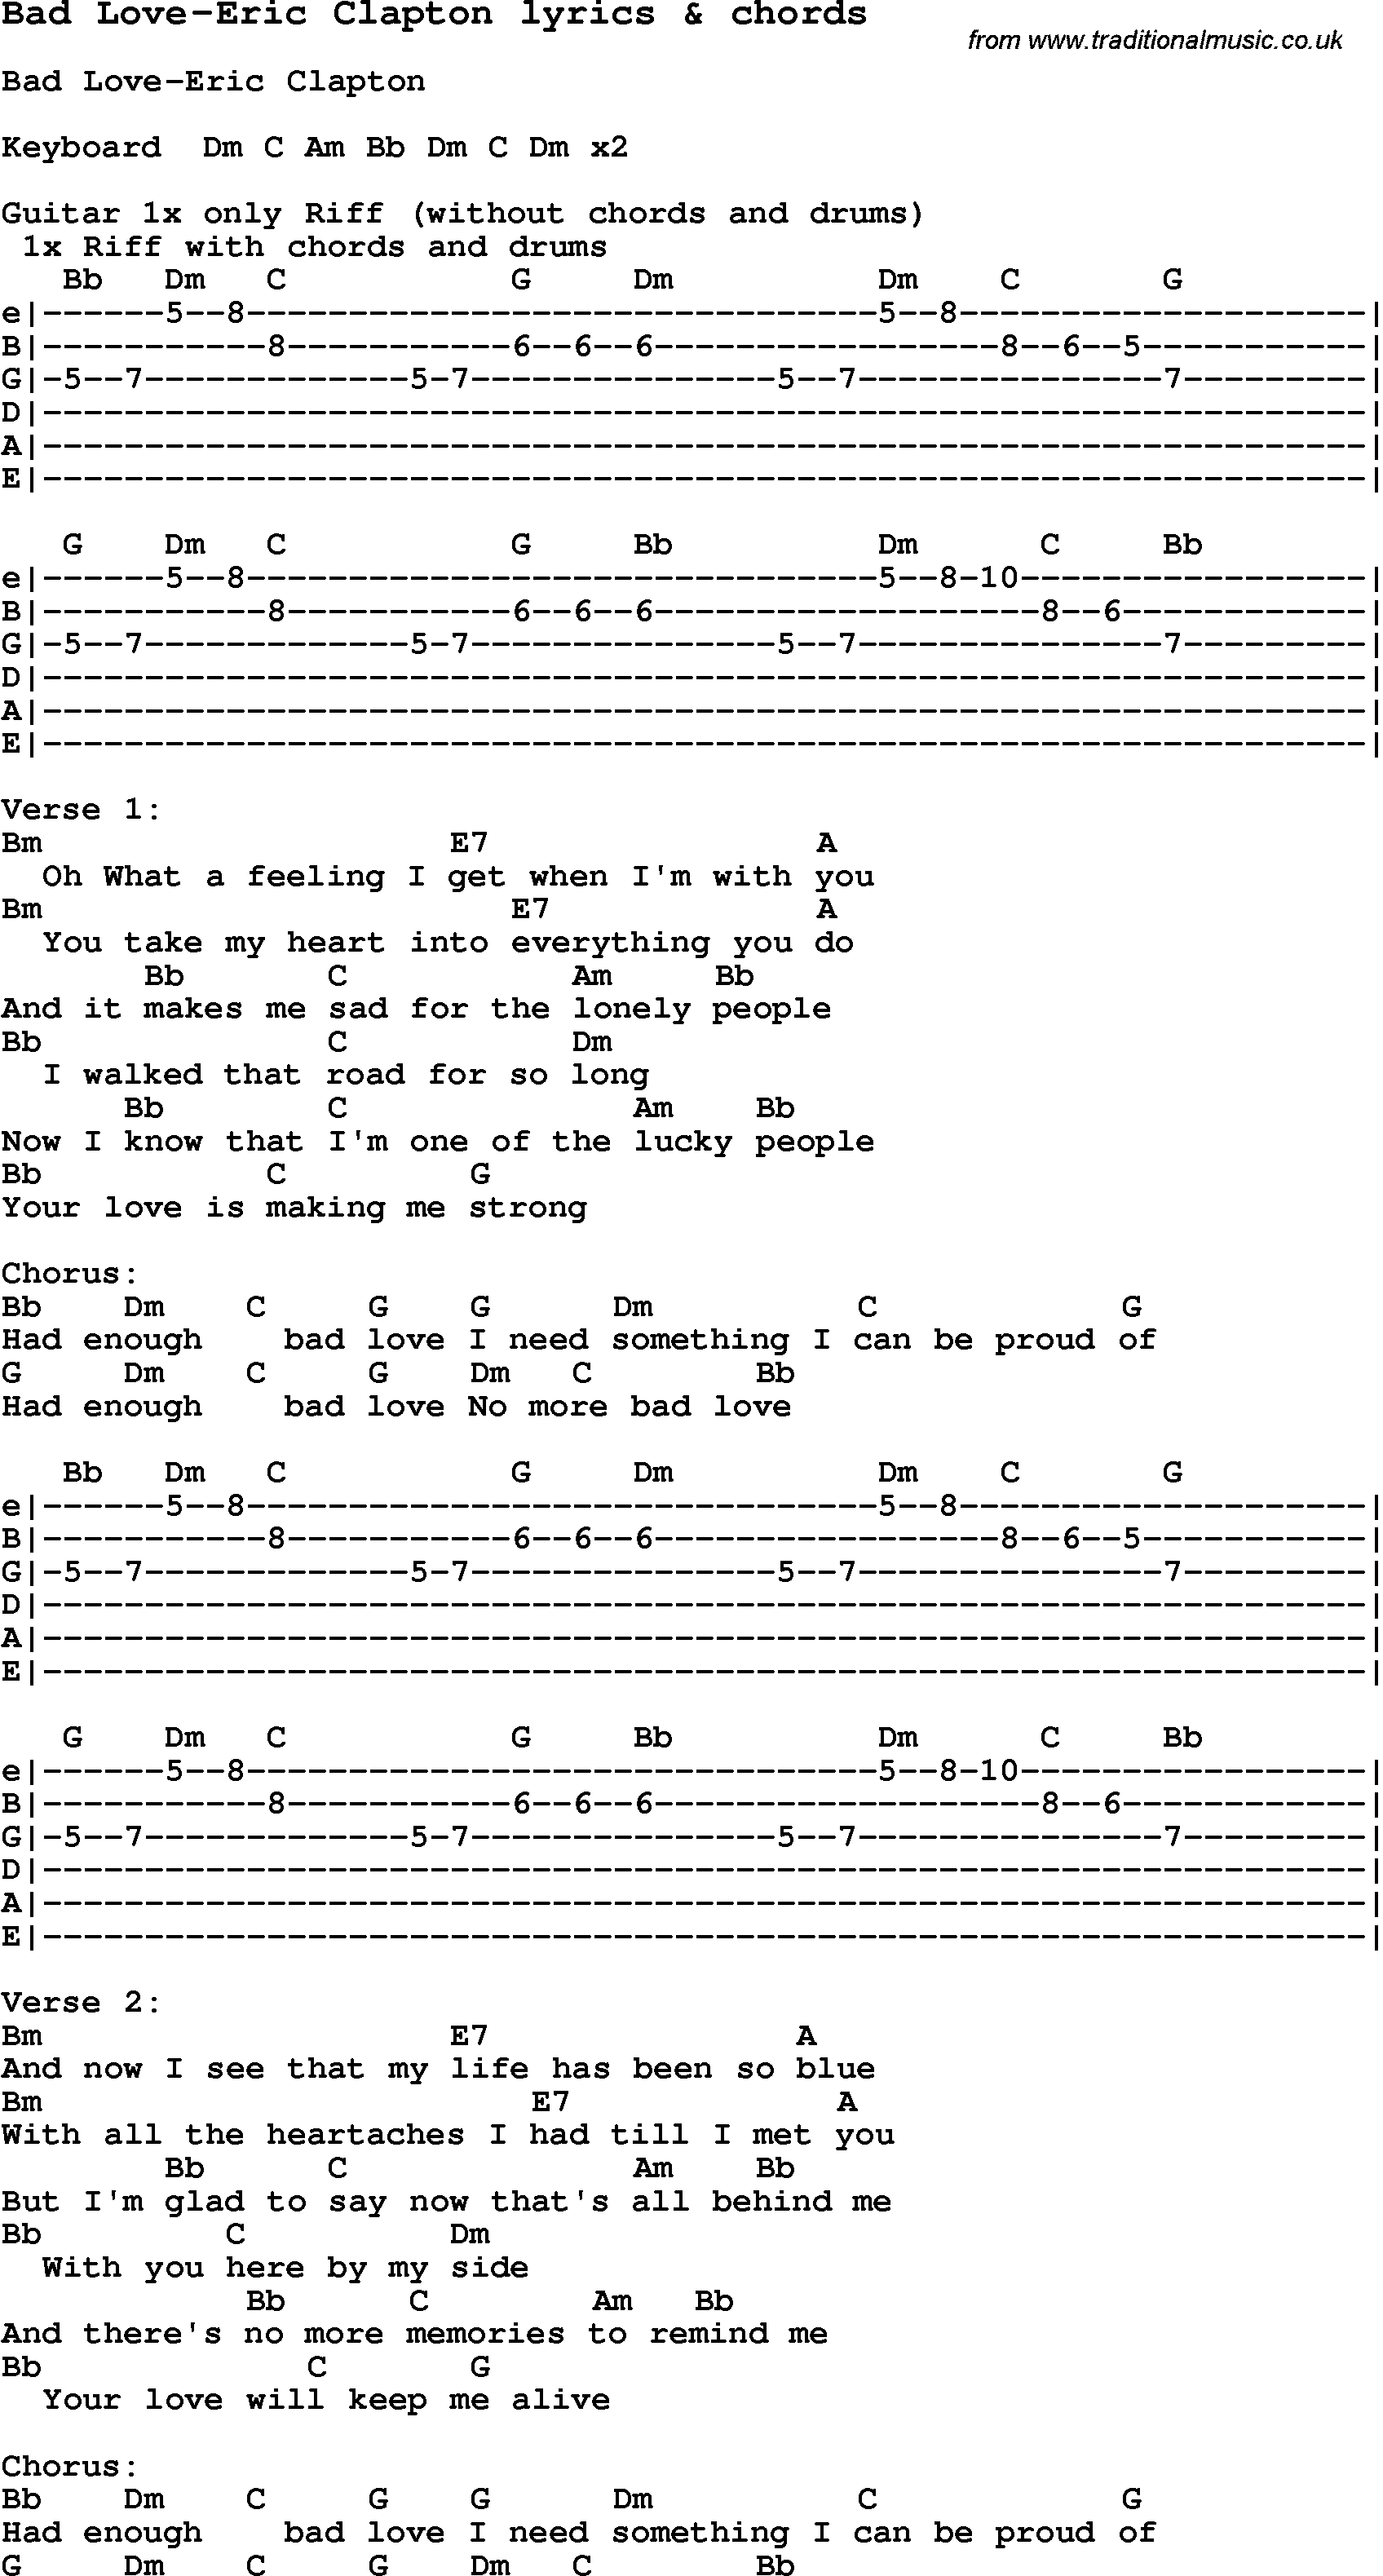 Love Song Lyrics for: Bad Love-Eric Clapton with chords for Ukulele, Guitar Banjo etc.